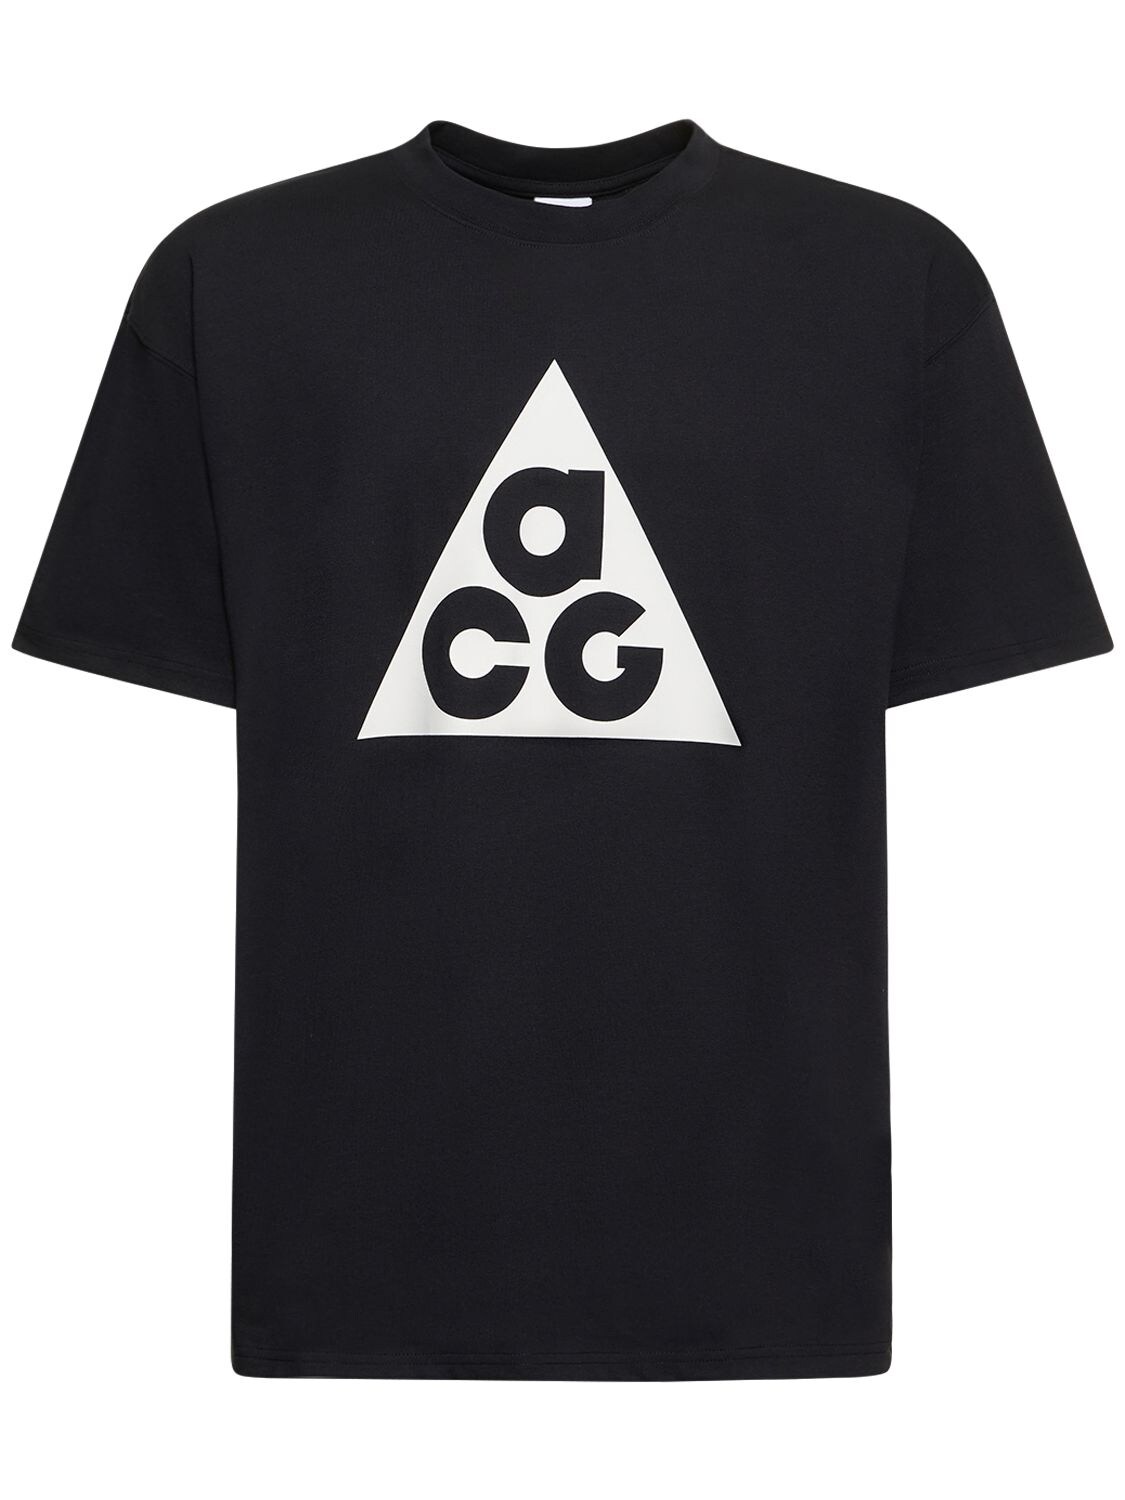 Acg Logo T-shirt – MEN > CLOTHING > T-SHIRTS